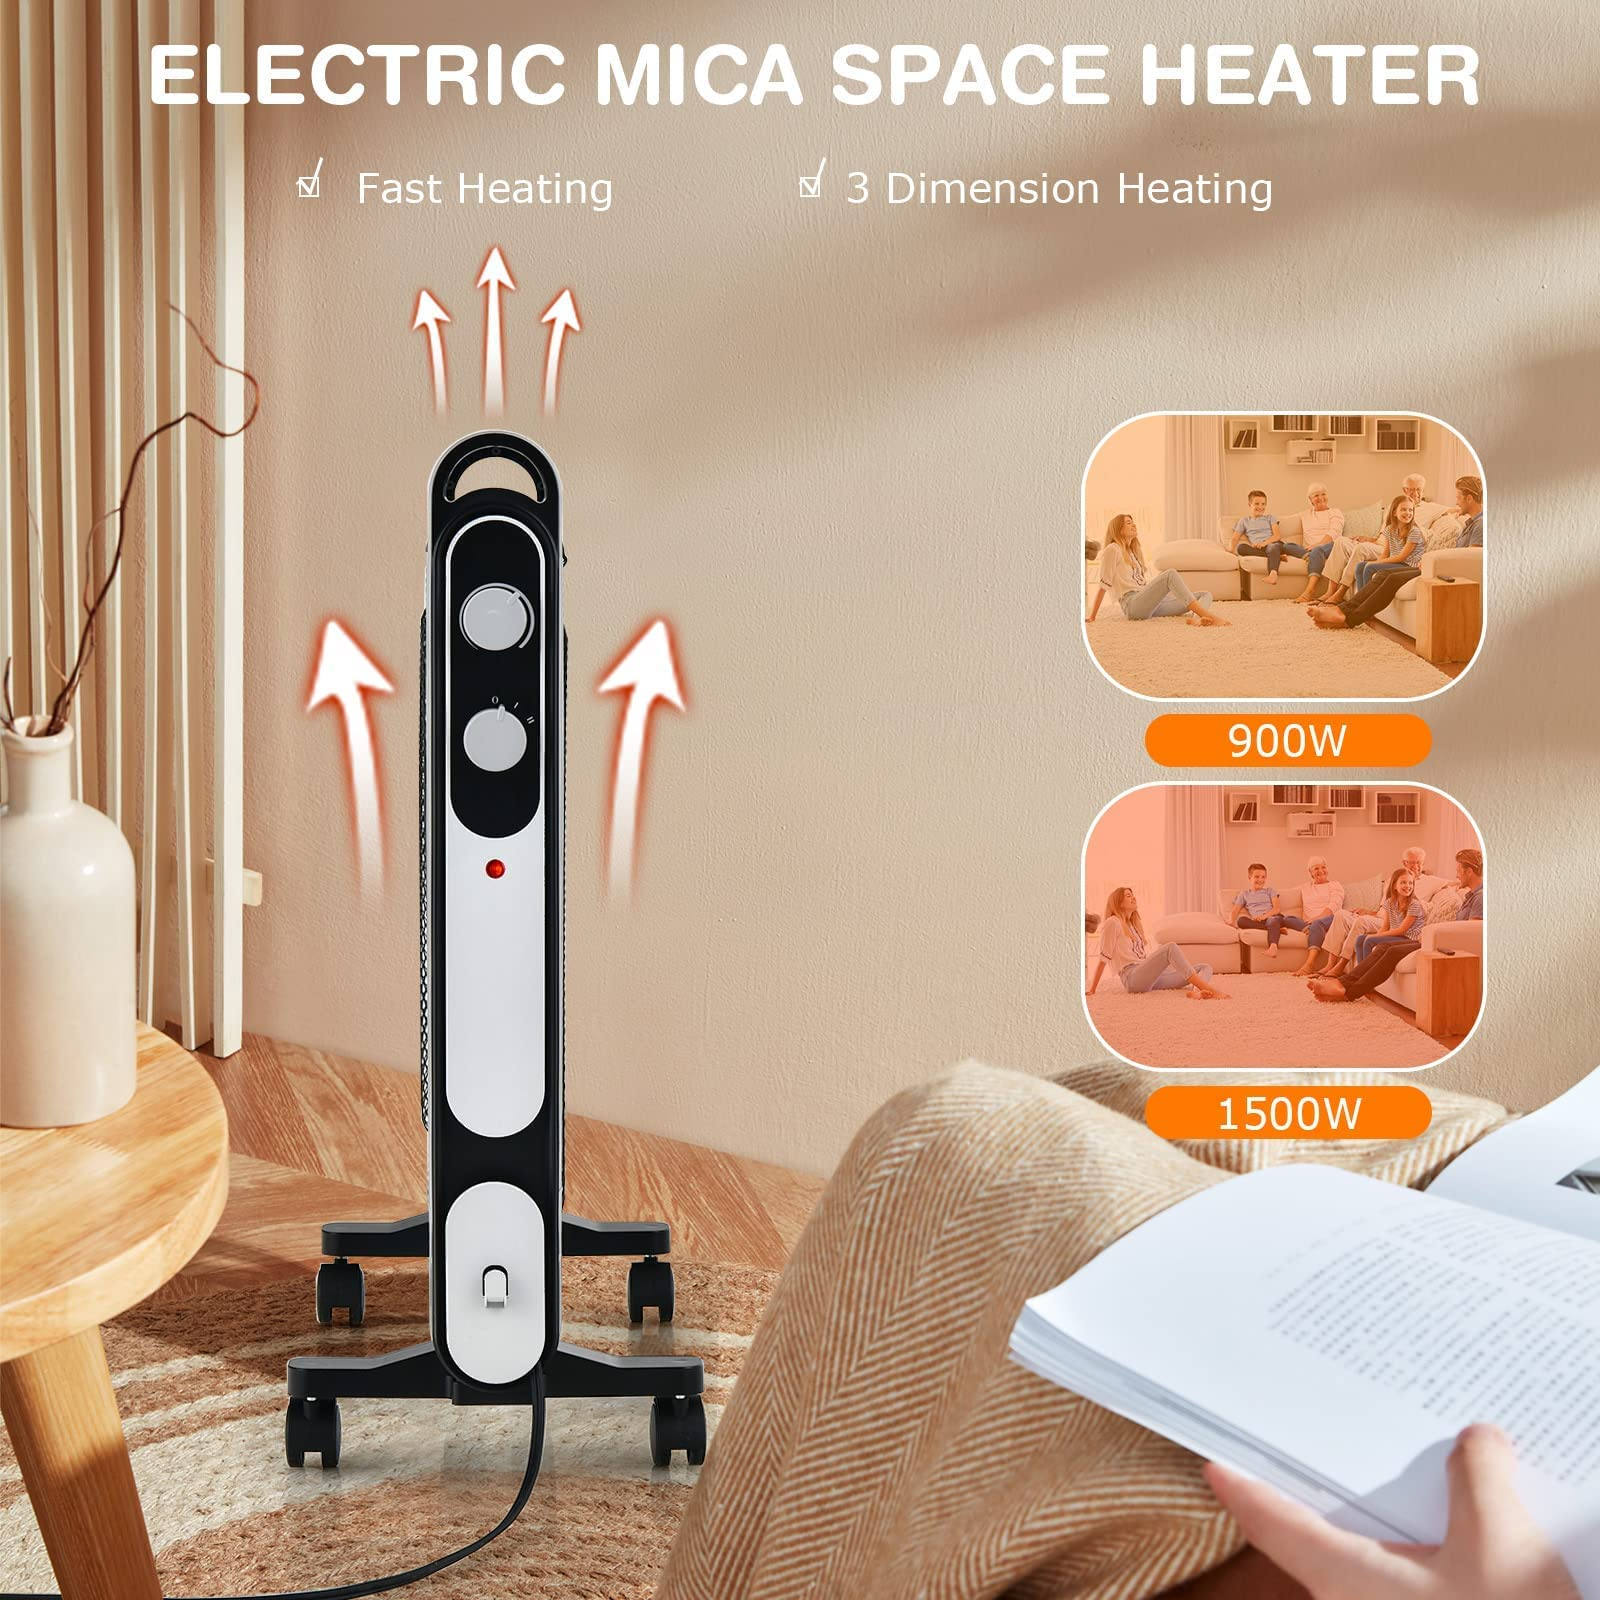  1500W Electric Mica Space Heater - Tangkula